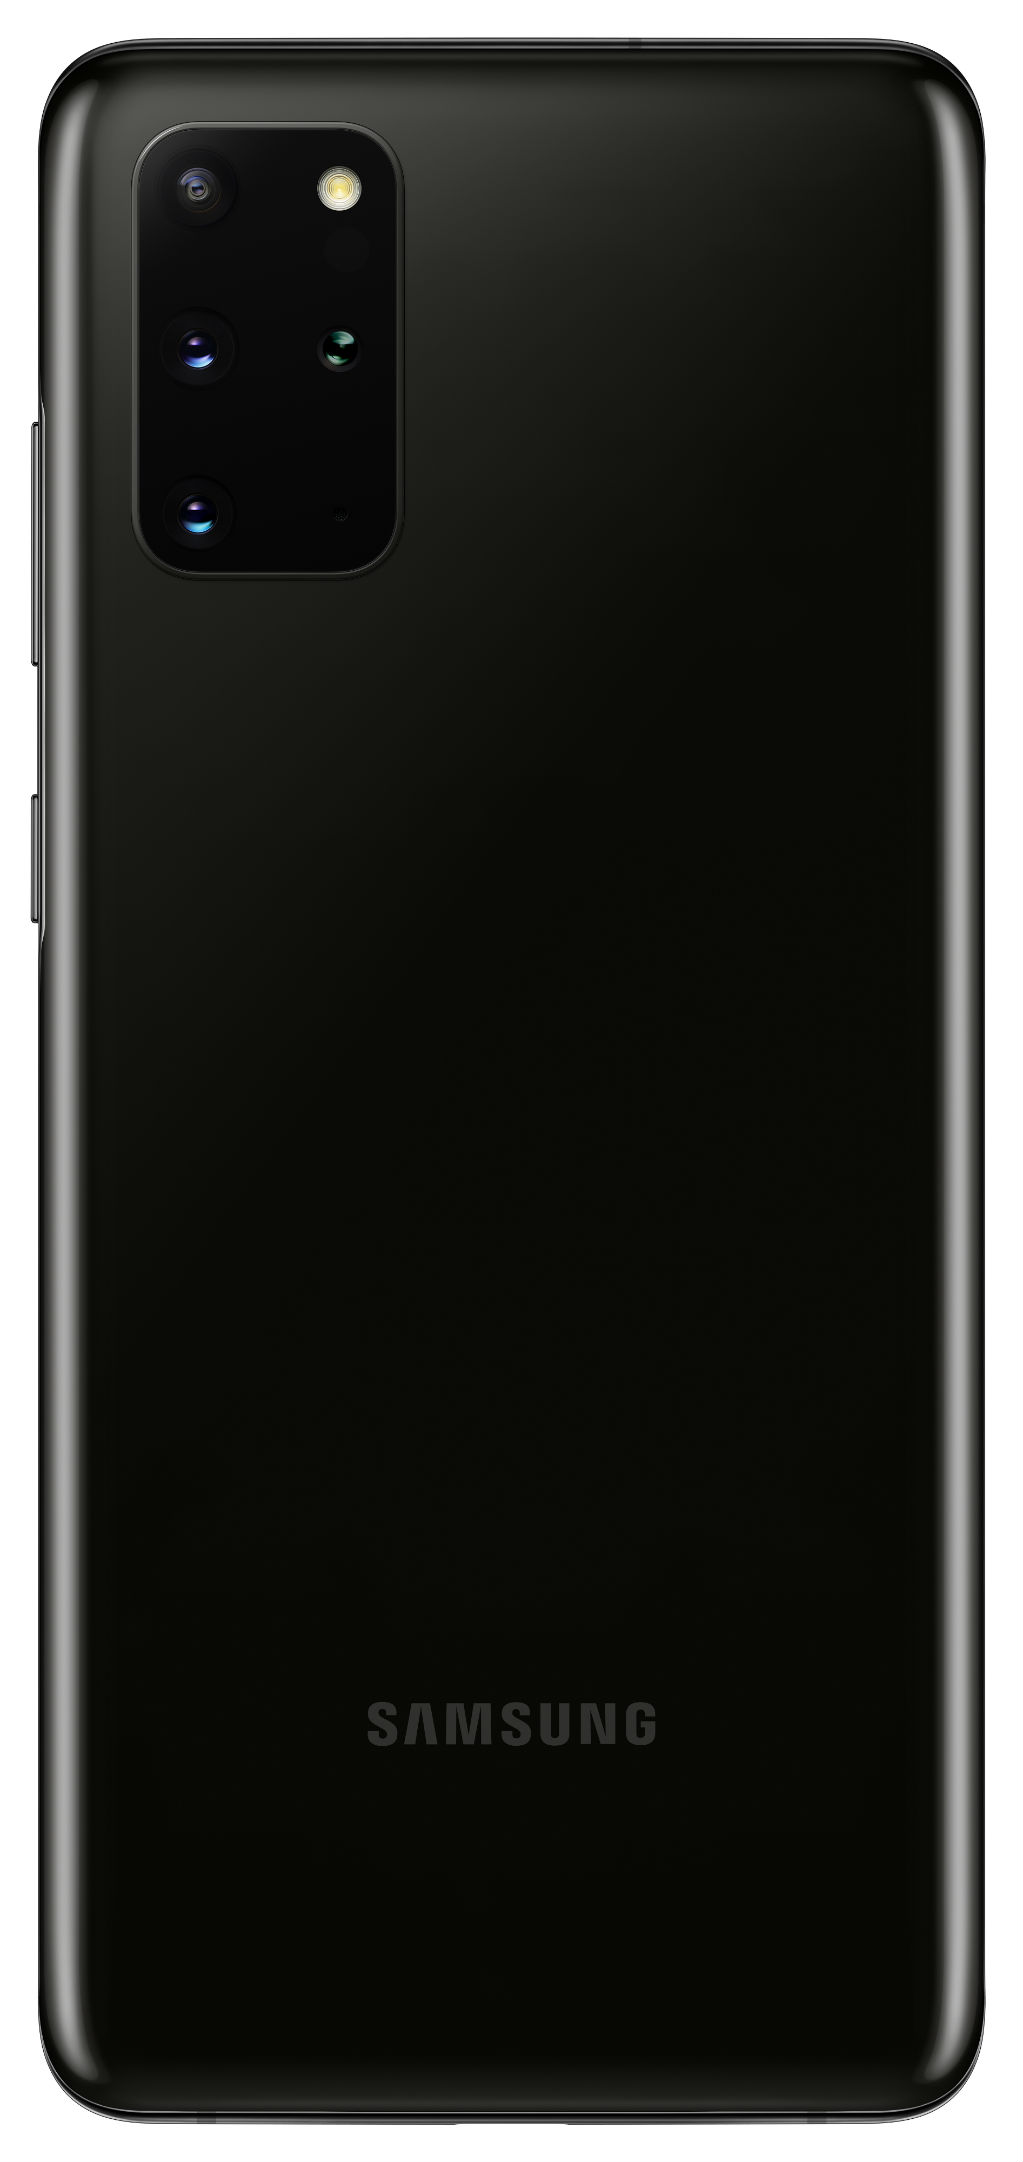 SAMSUNG Unlocked Galaxy S20 Plus, 128GB Black - Smartphone - image 2 of 6